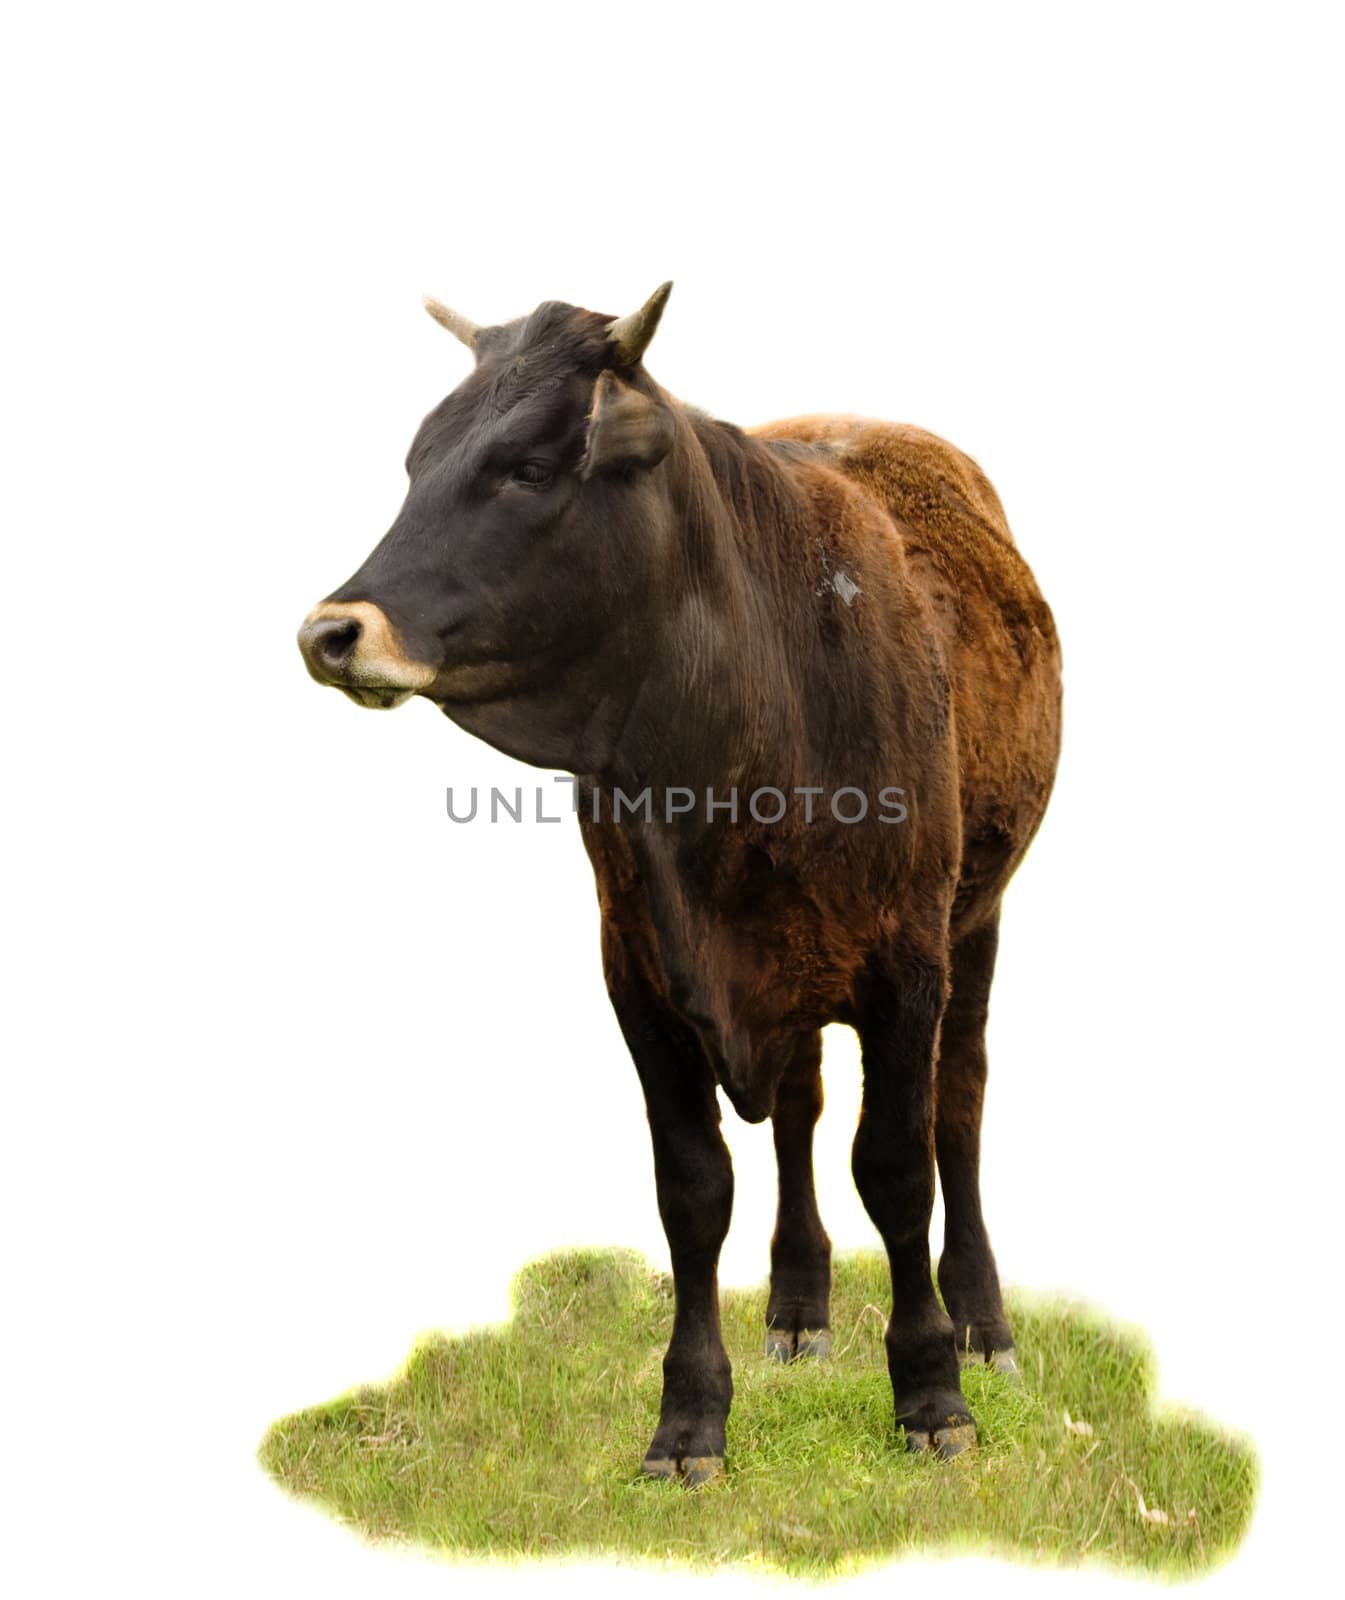 Australian beef cattle breed - cow isolated on white - angus, charolais, brahman cross